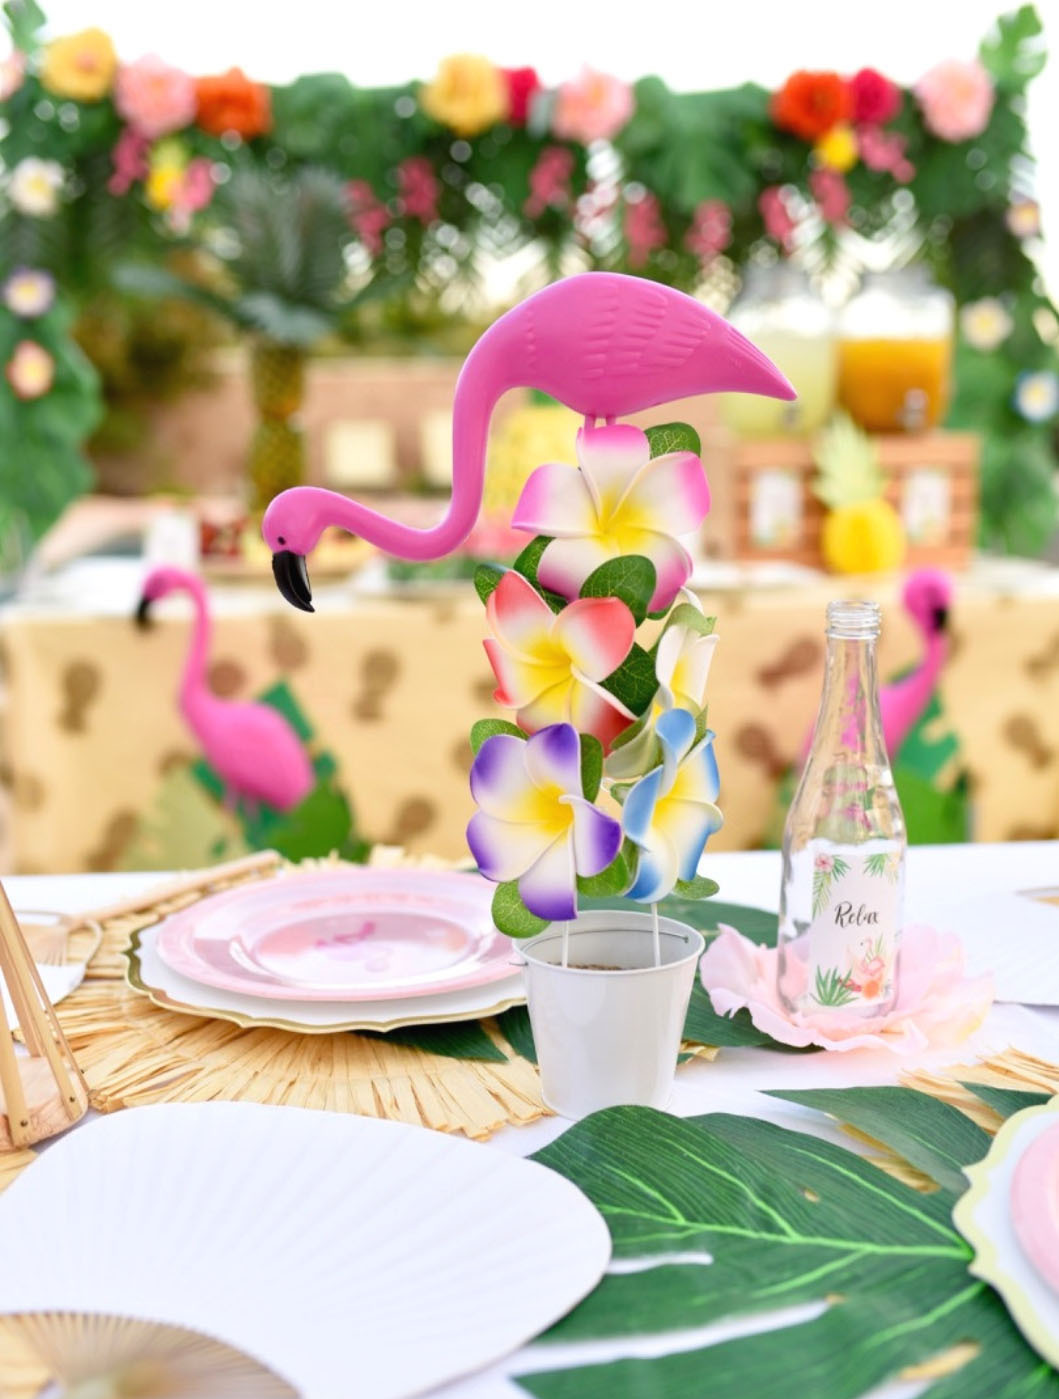 Pink Flamingo Party Supplies 16 Flamingo Plates, Pineapple Plates